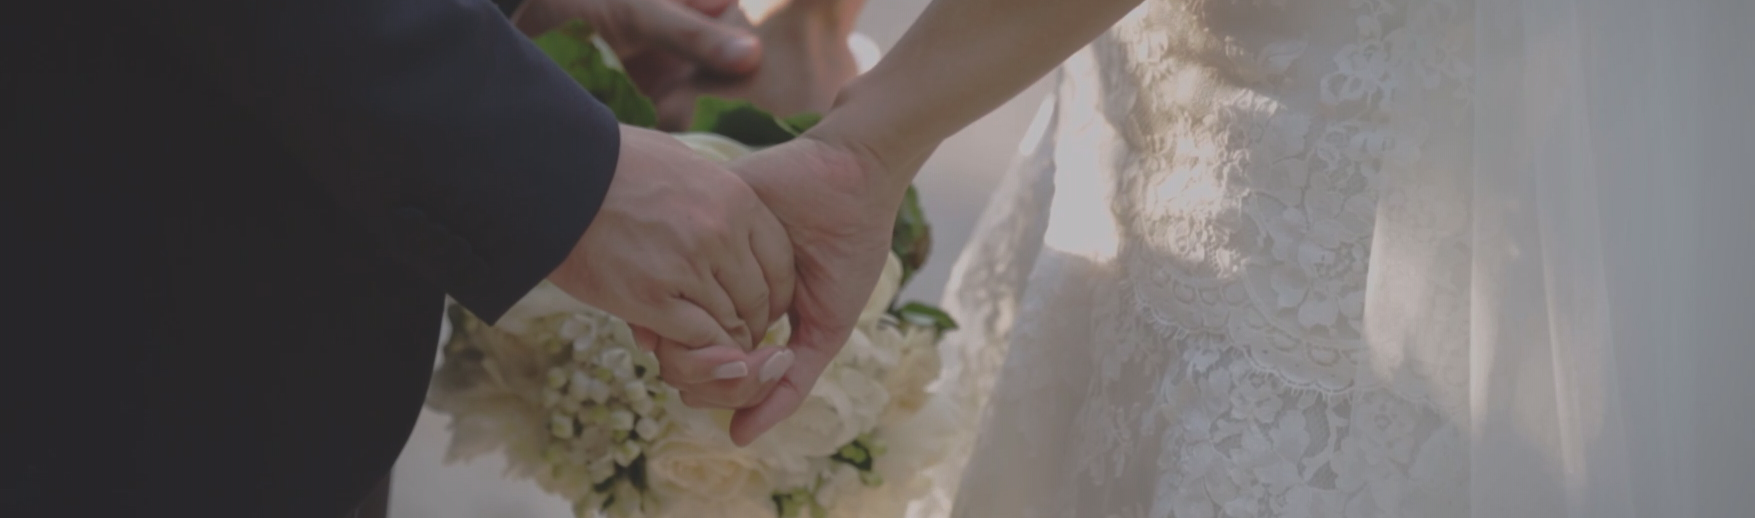 Domenico e Sara - Wedding day - Trailer